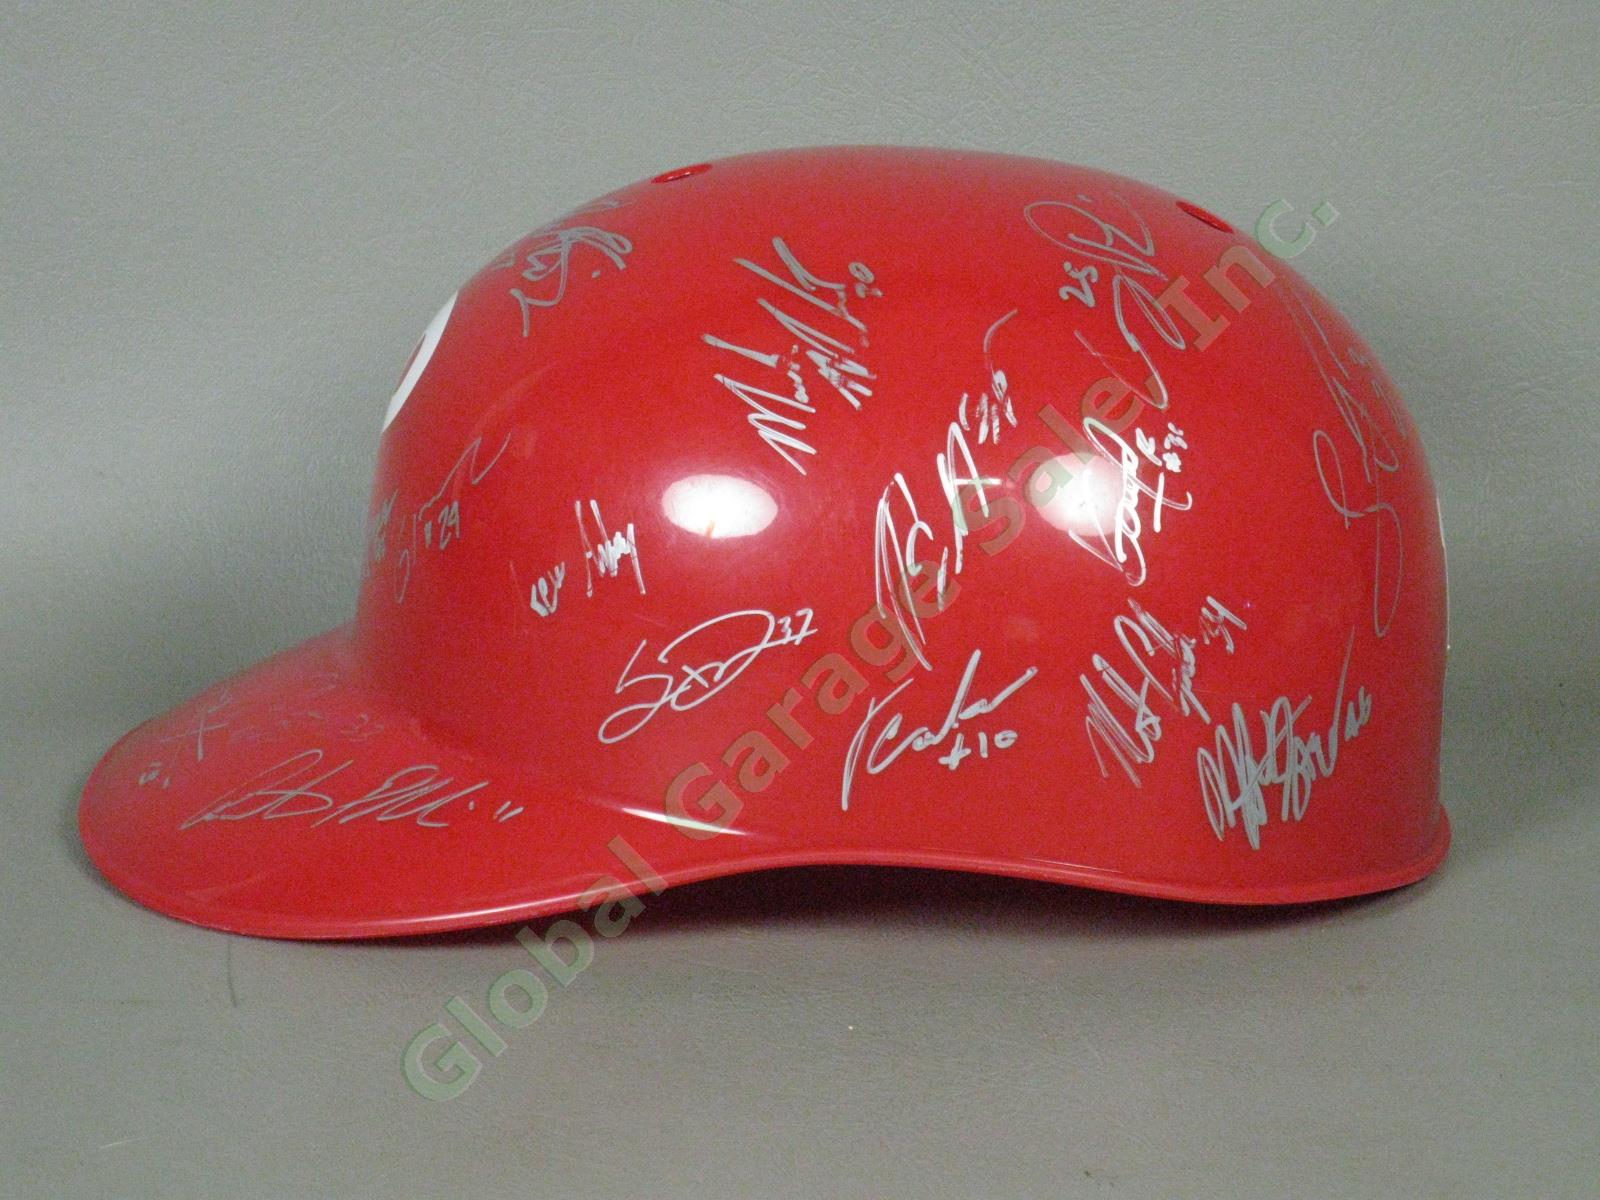 2013 Williamsport Crosscutters Team Signed Baseball Helmet Philadelphia Phillies 3